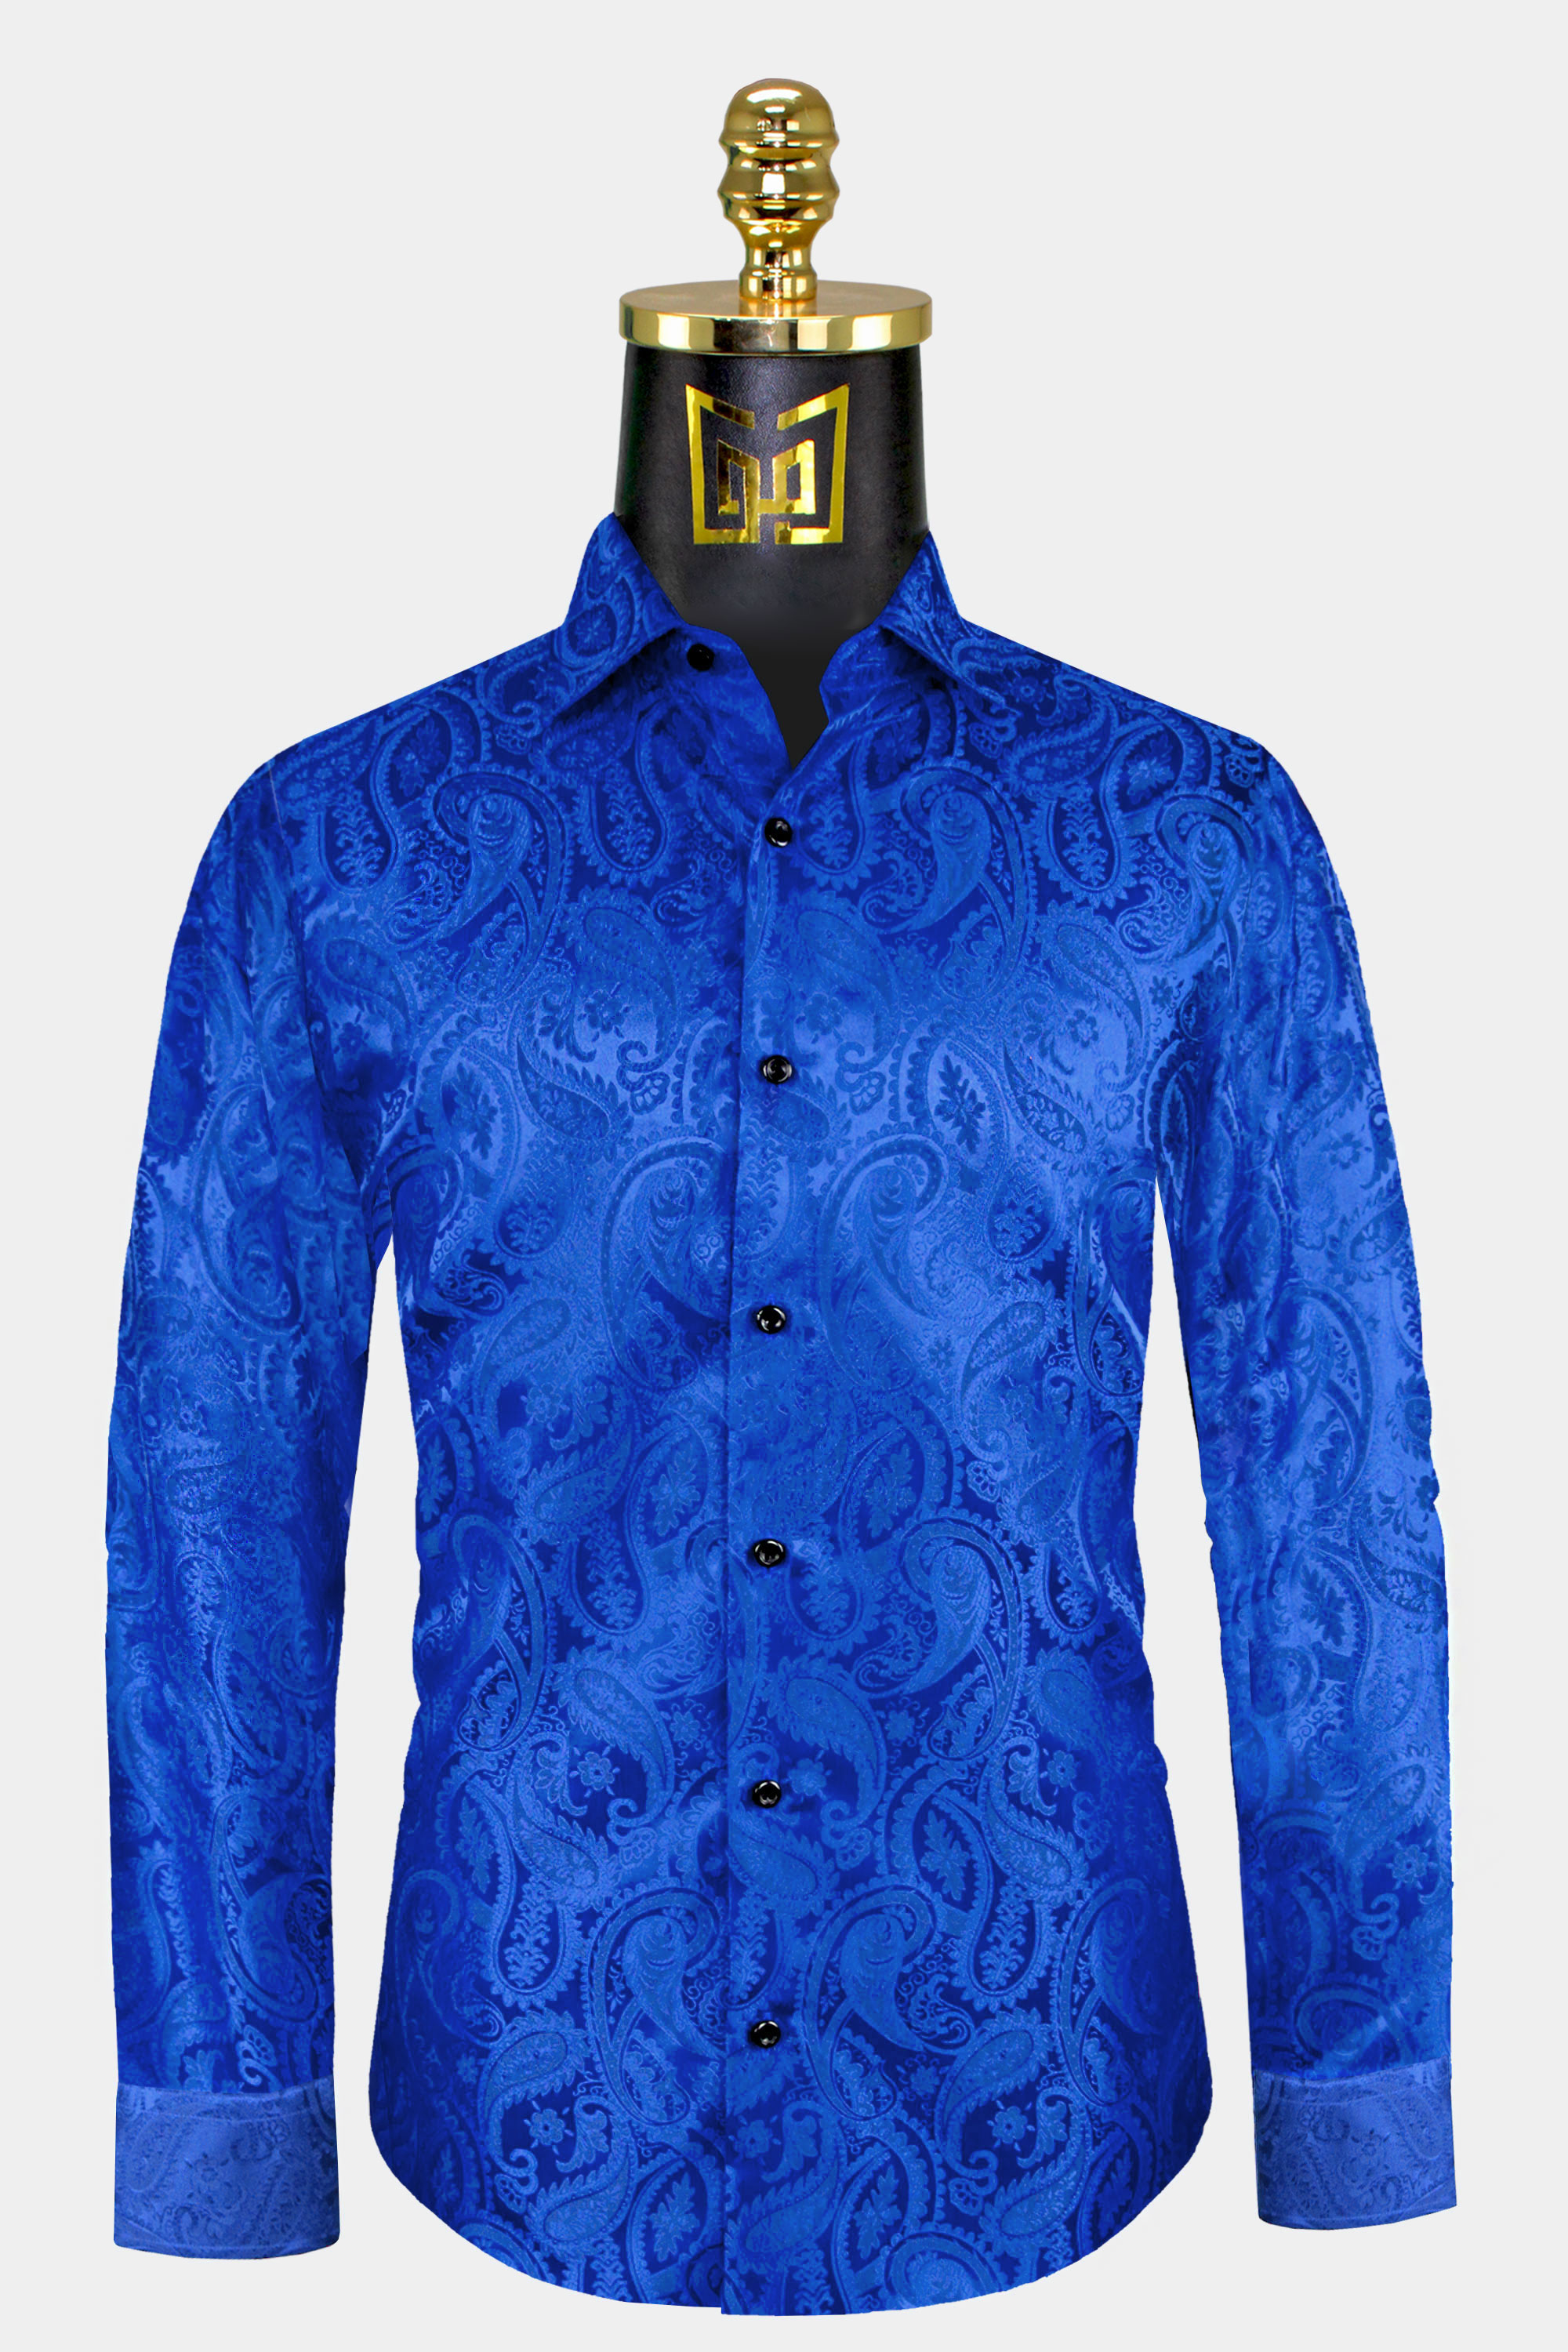 Mens-Royal-Blue-Paisley-Shirt-Dress-Shirt-from-Gentlemansguru.com